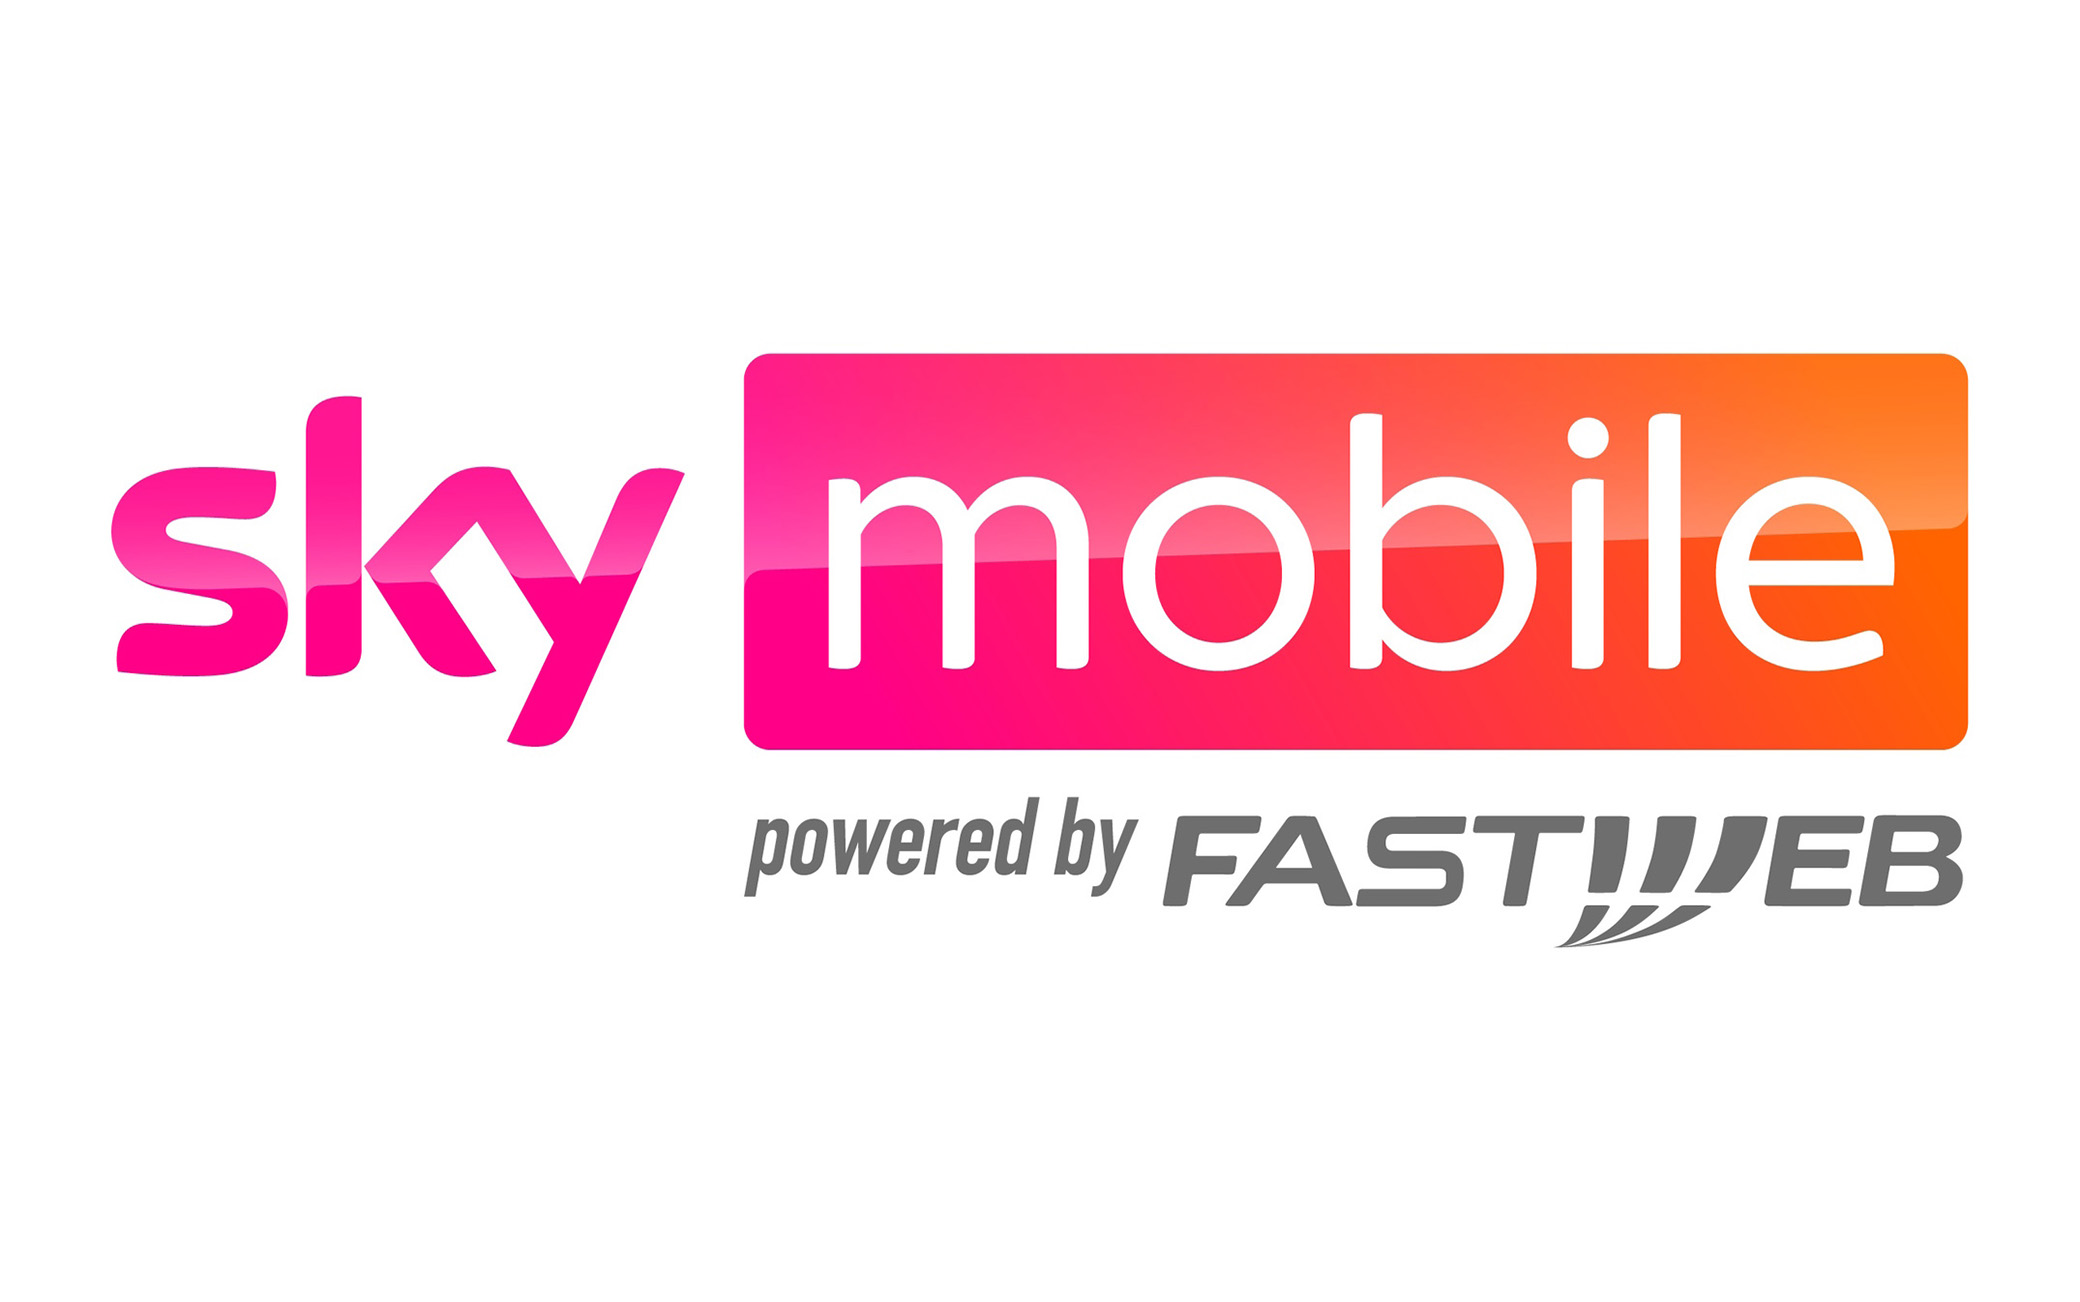 Accordo pluriennale tra Sky e Fastweb, arriva Sky Mobile powered by Fastweb